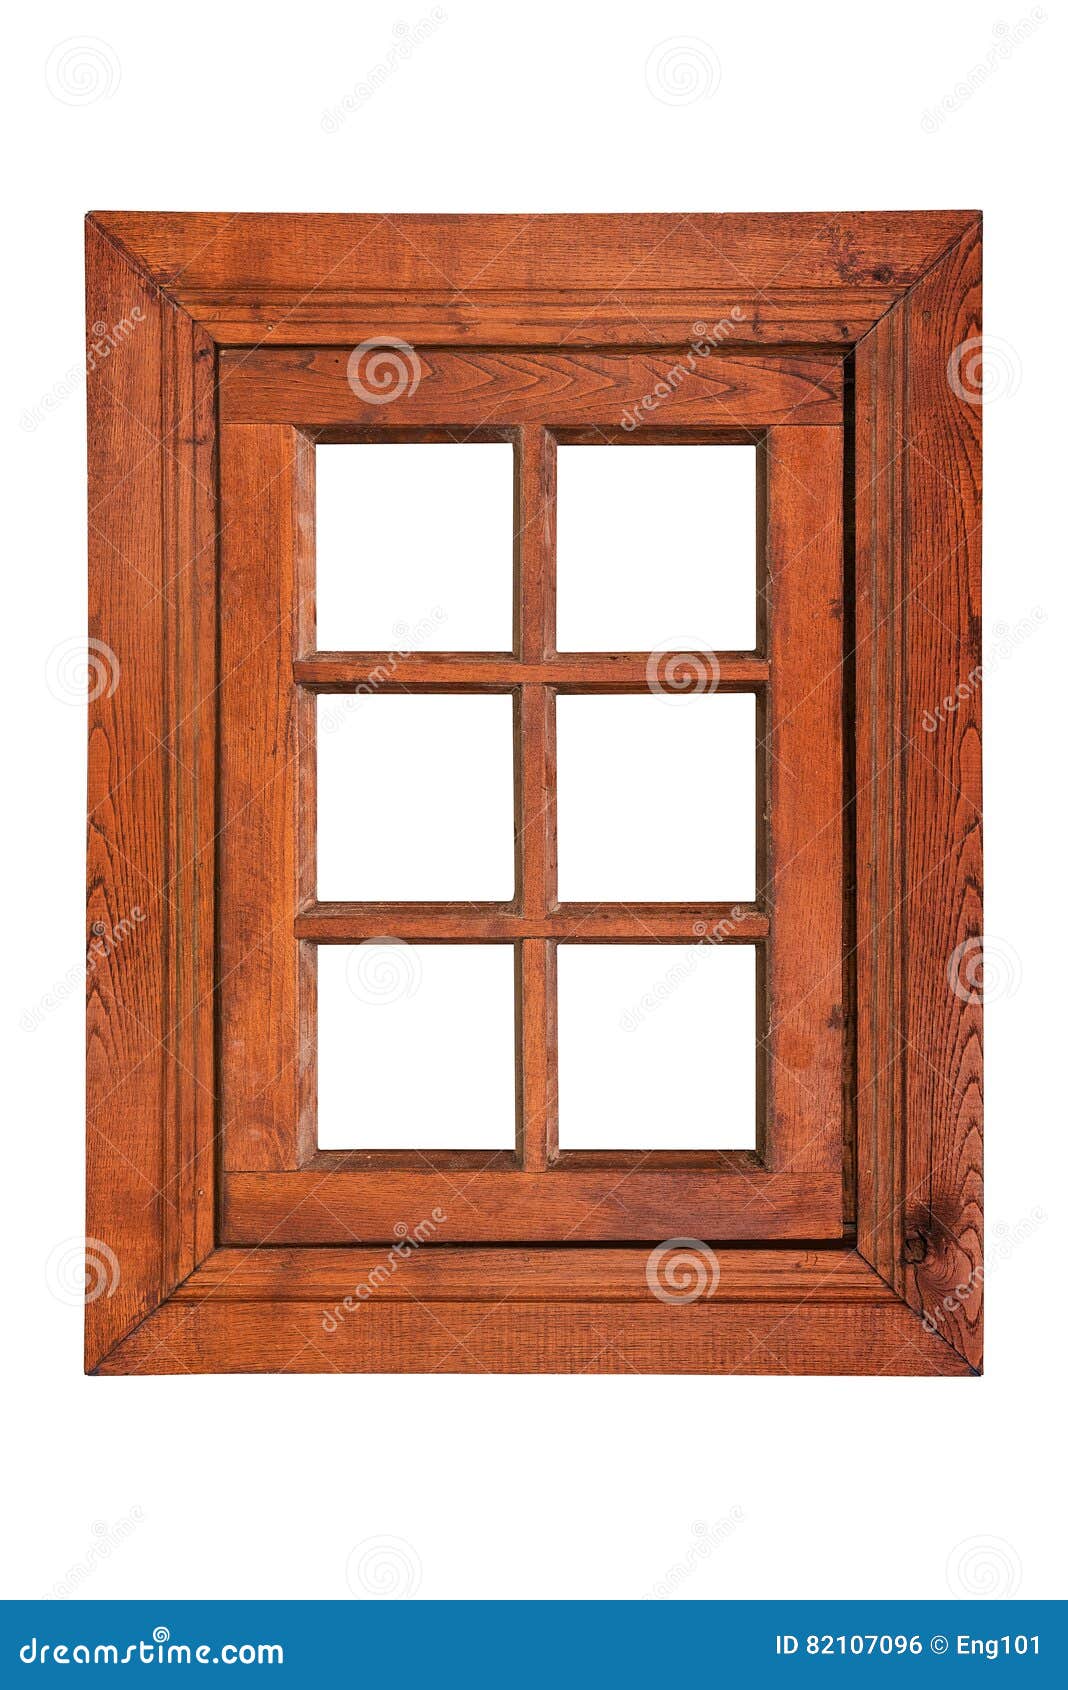 wooden casement window with six panes